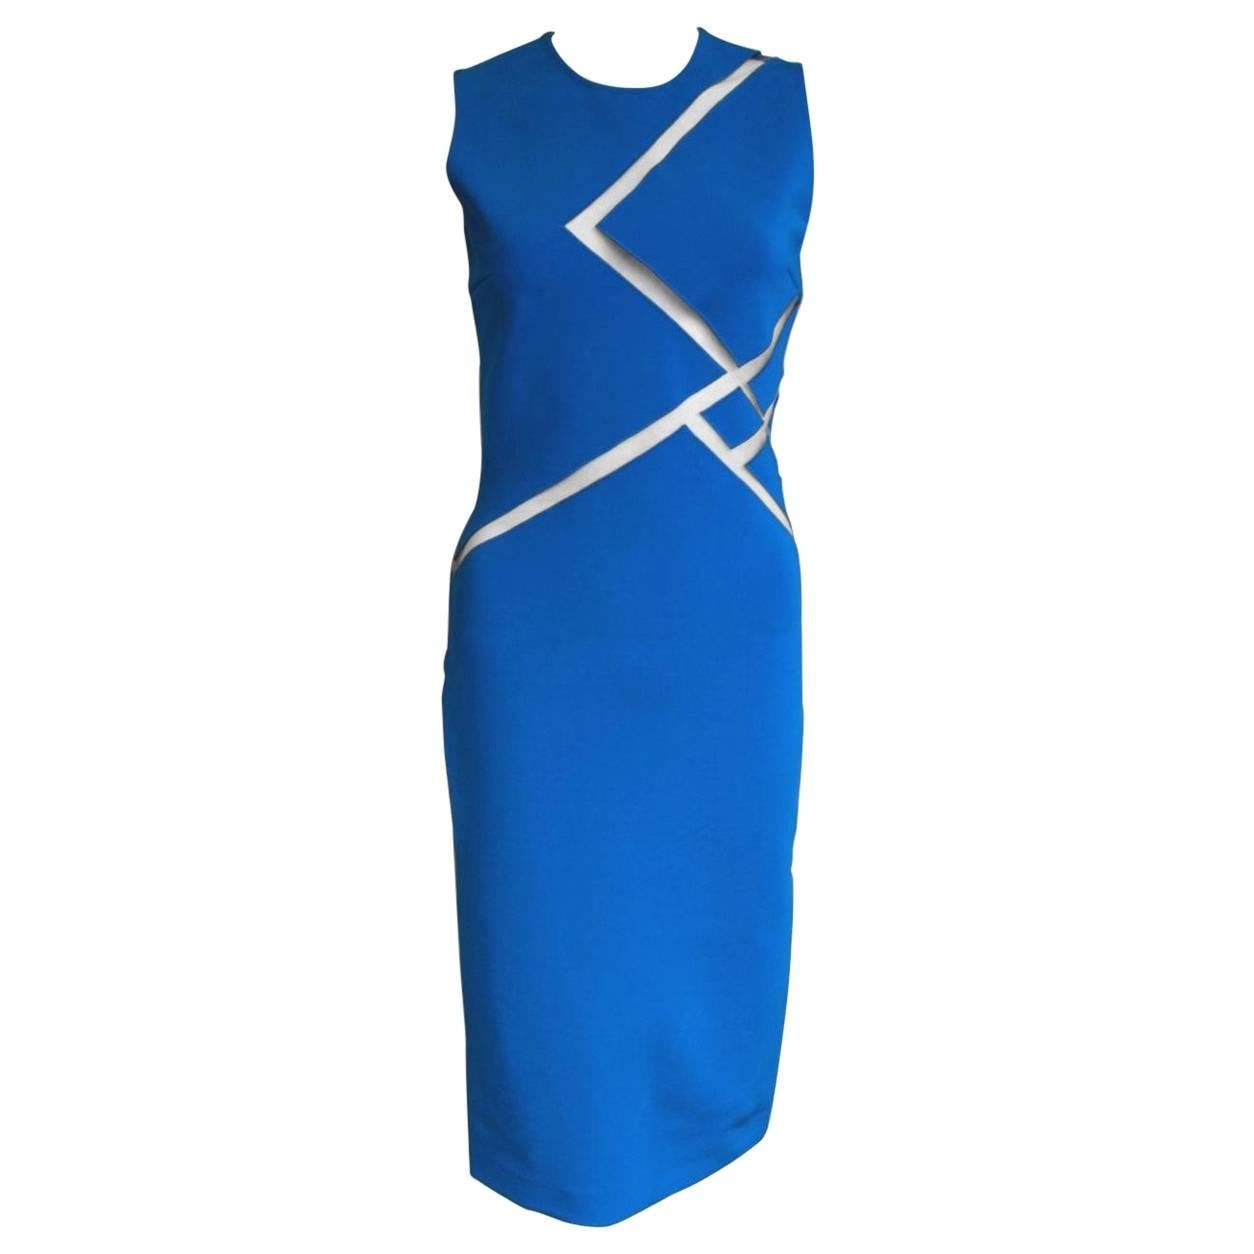 New David Koma Blue Mesh Insert Cut Out Dress uk 10  Statement blue dress from D For Sale